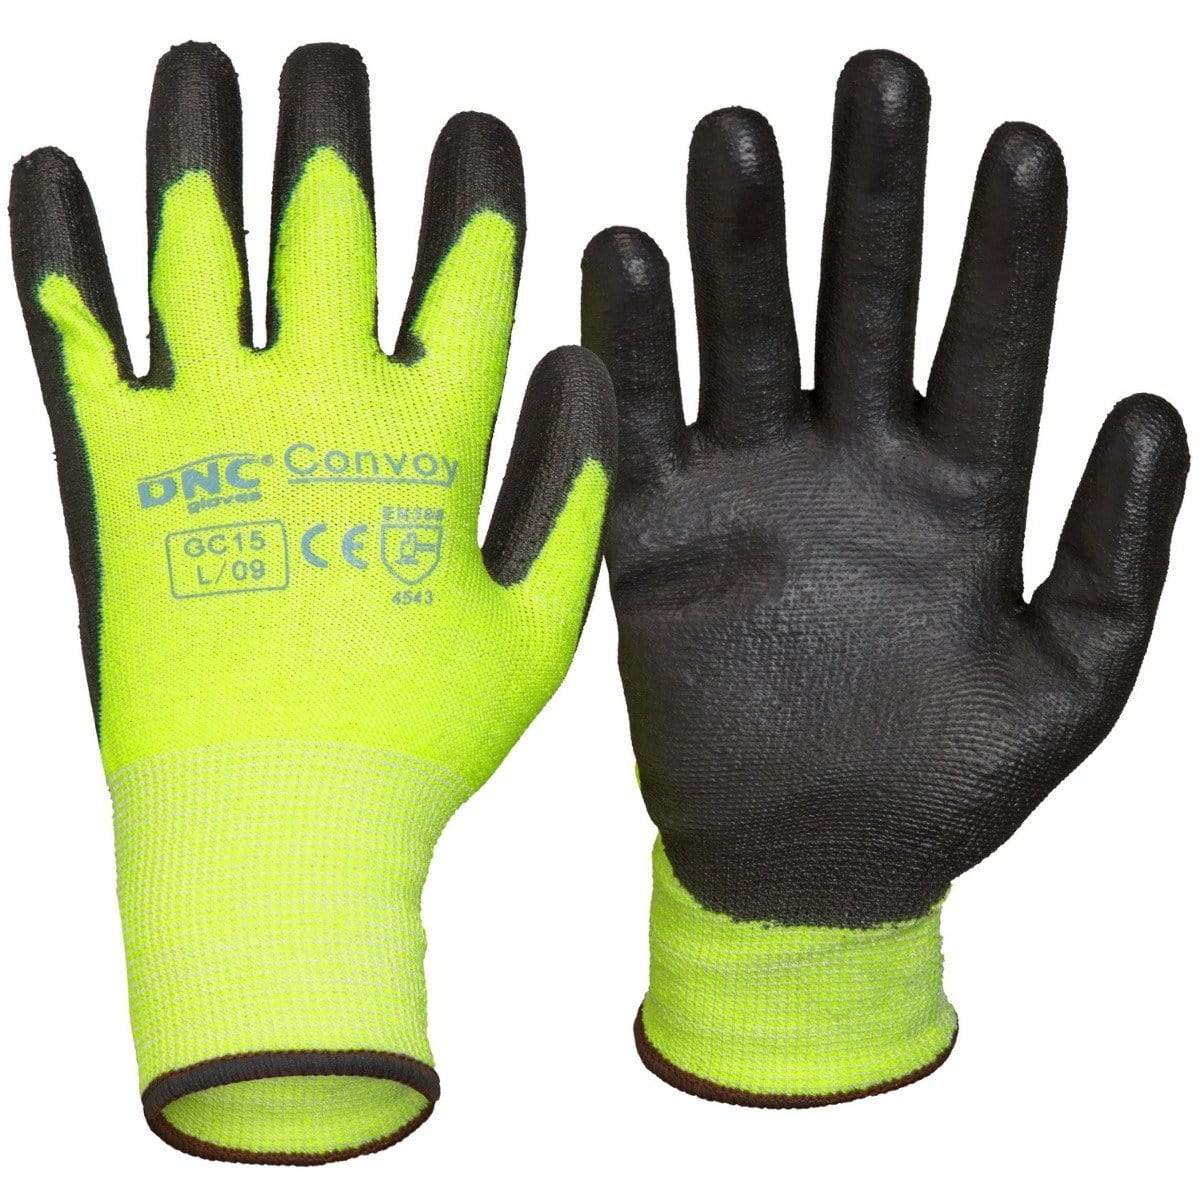 Dnc Workwear Convoy - GC15 PPE DNC Workwear Black/HiVis Yellow S/7 